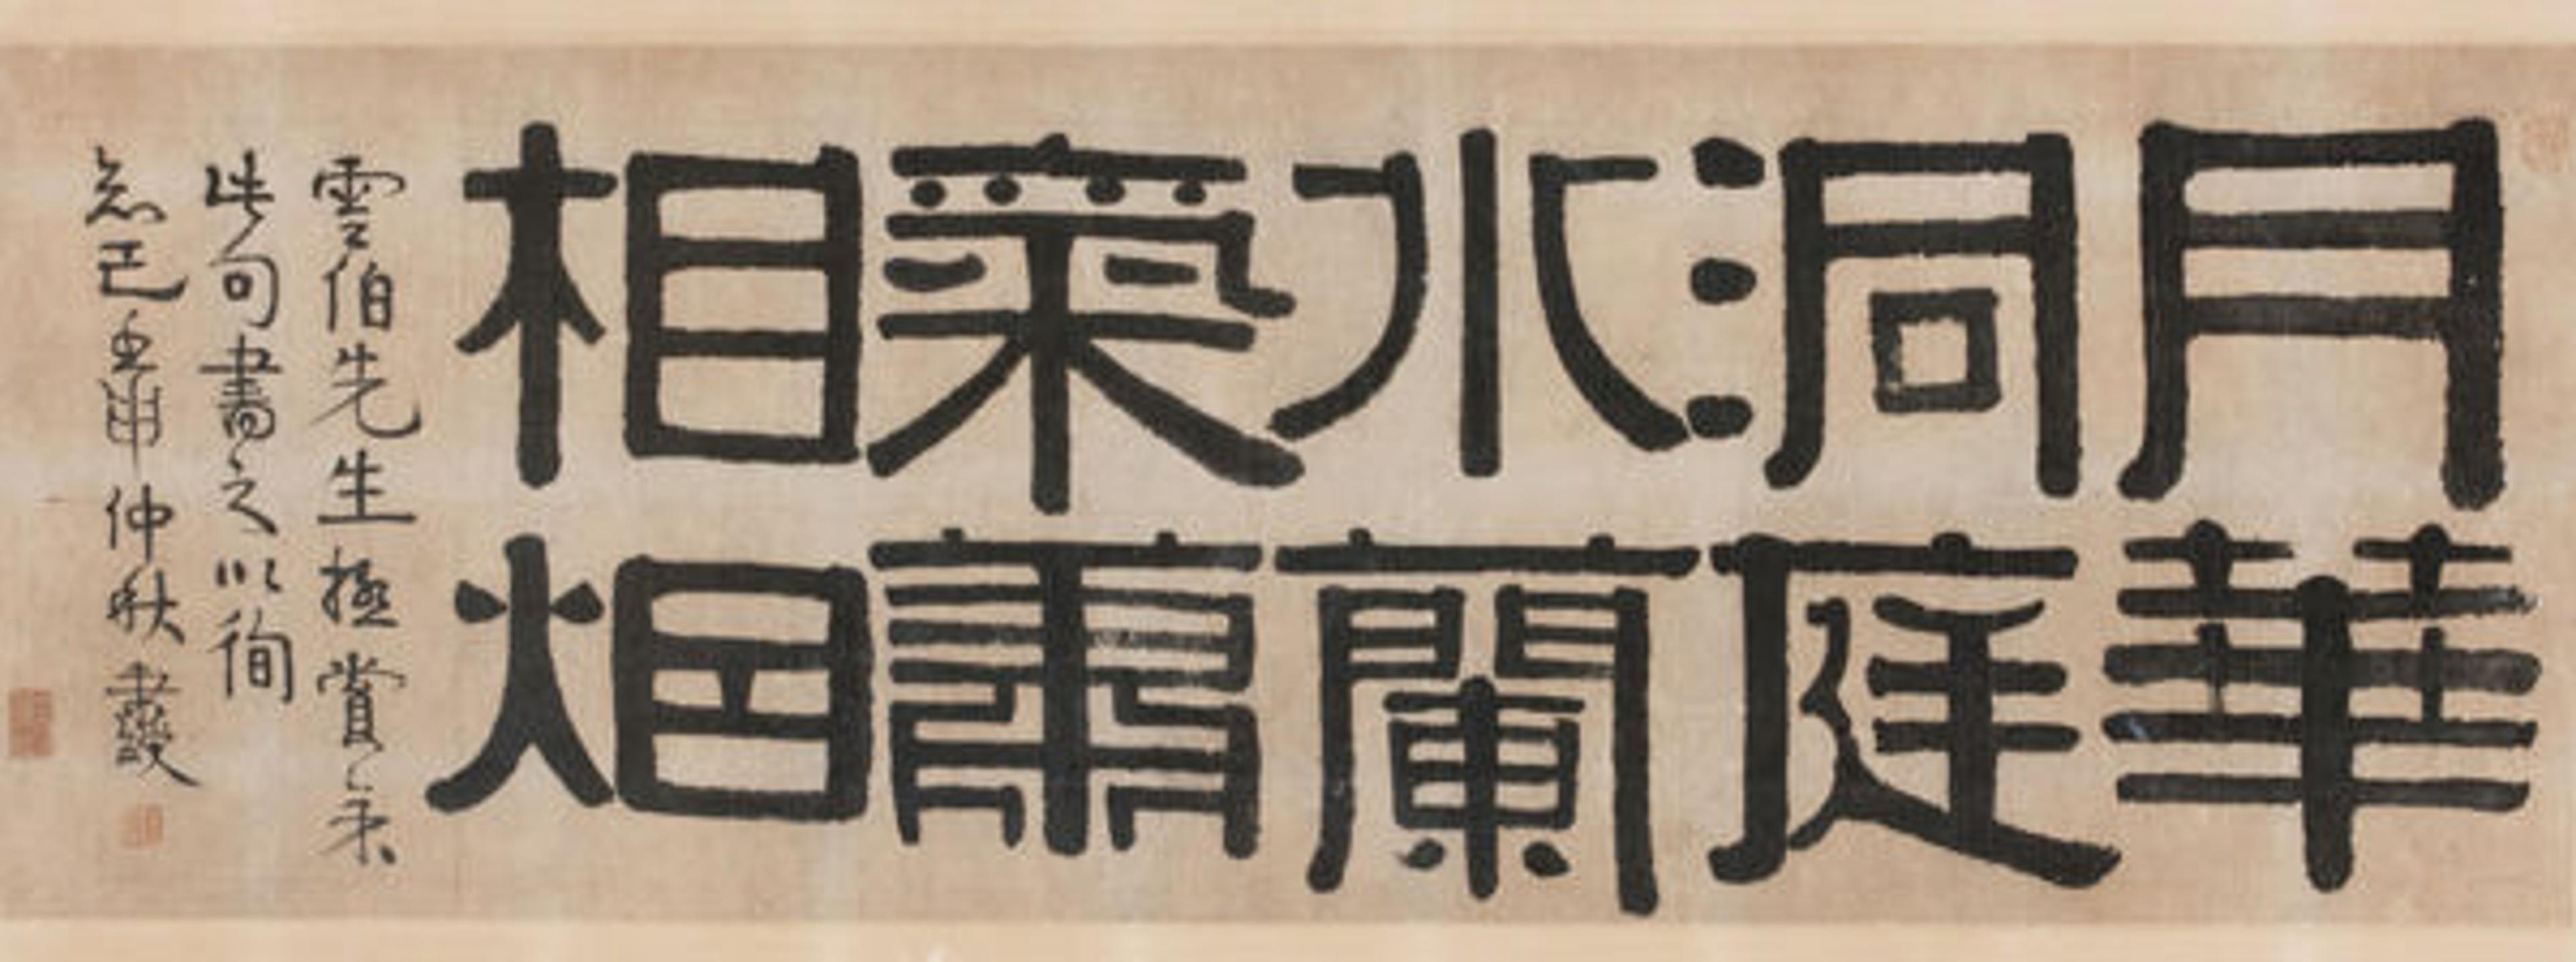 Yi Bingshou (Chinese, 1754–1815). Poetic Couplet, dated 1812